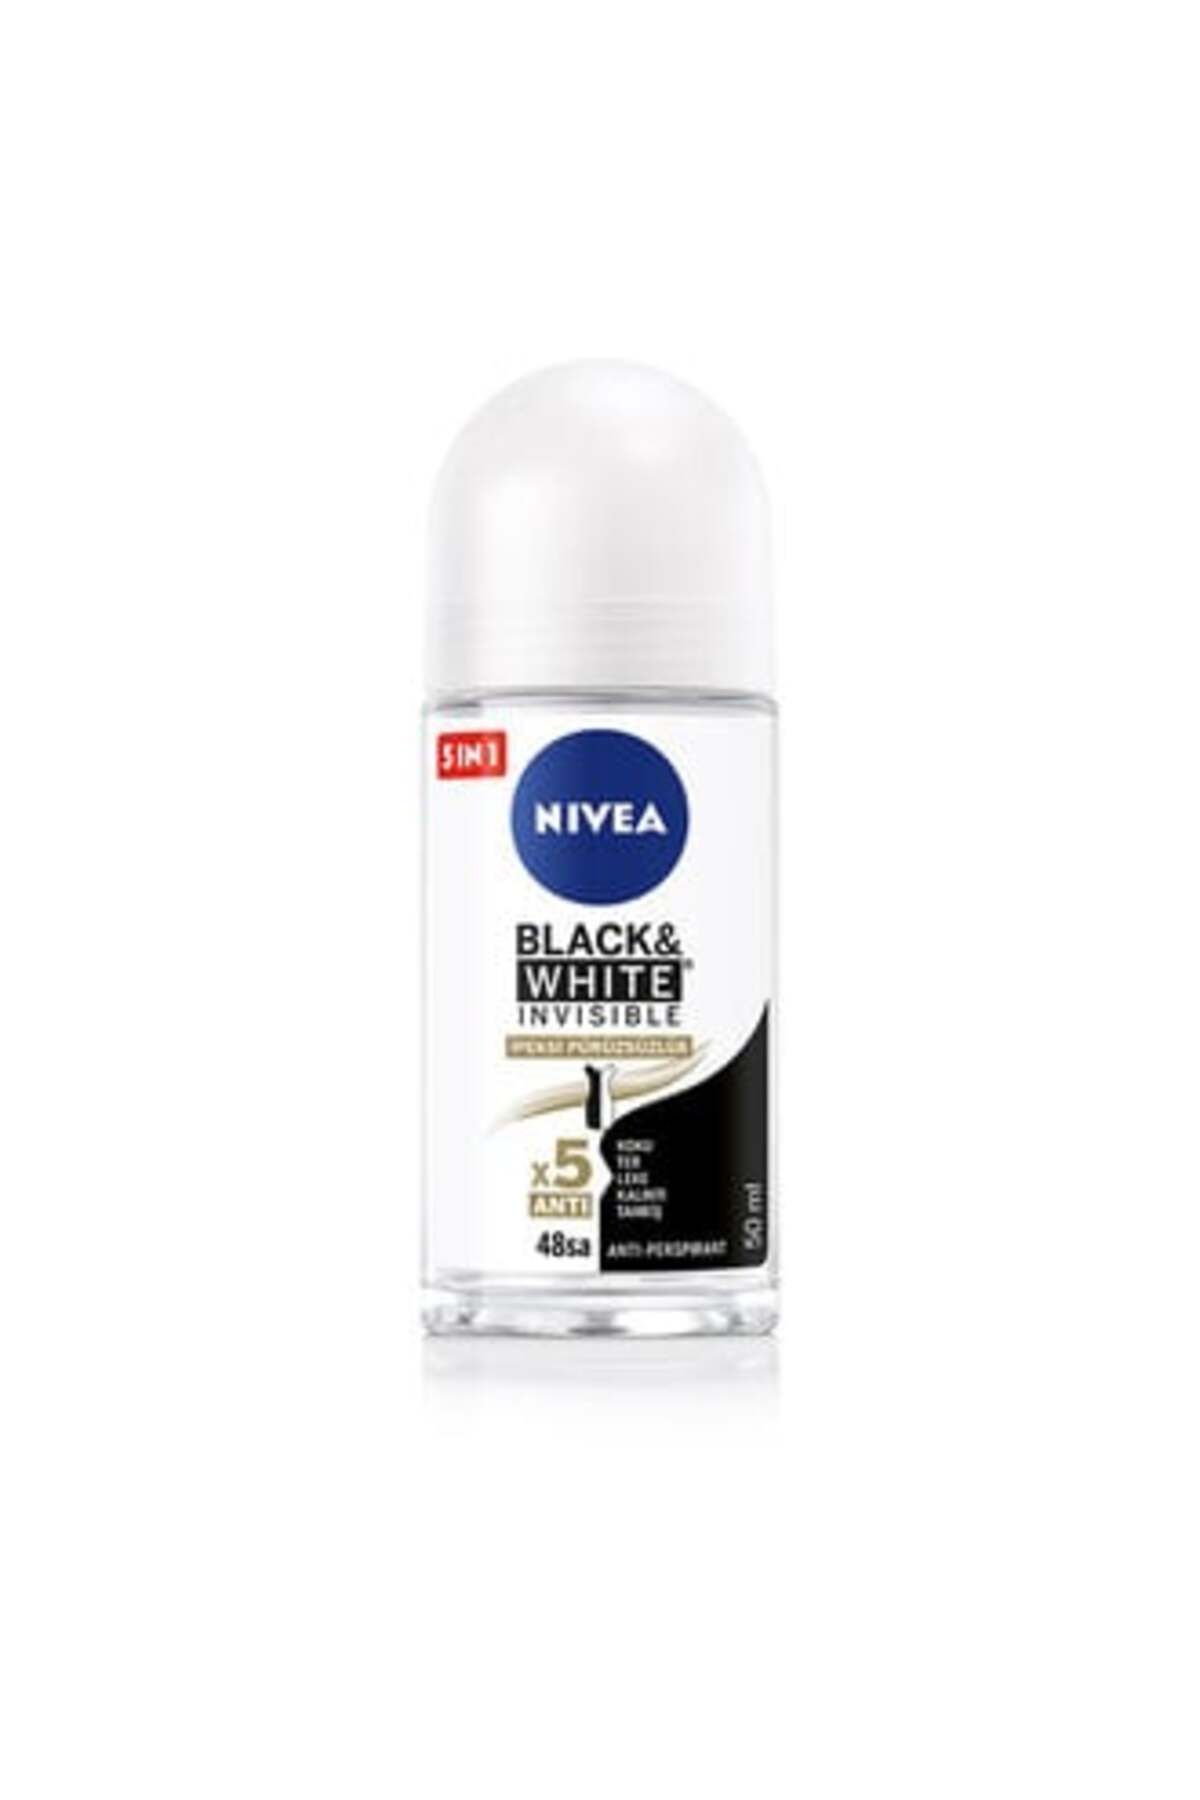 NIVEA ضدعرق رول زنانه مخصوص پوست های سیاه و سفید با صمغ صورتی 50 میلی لیتر (1 عدد)